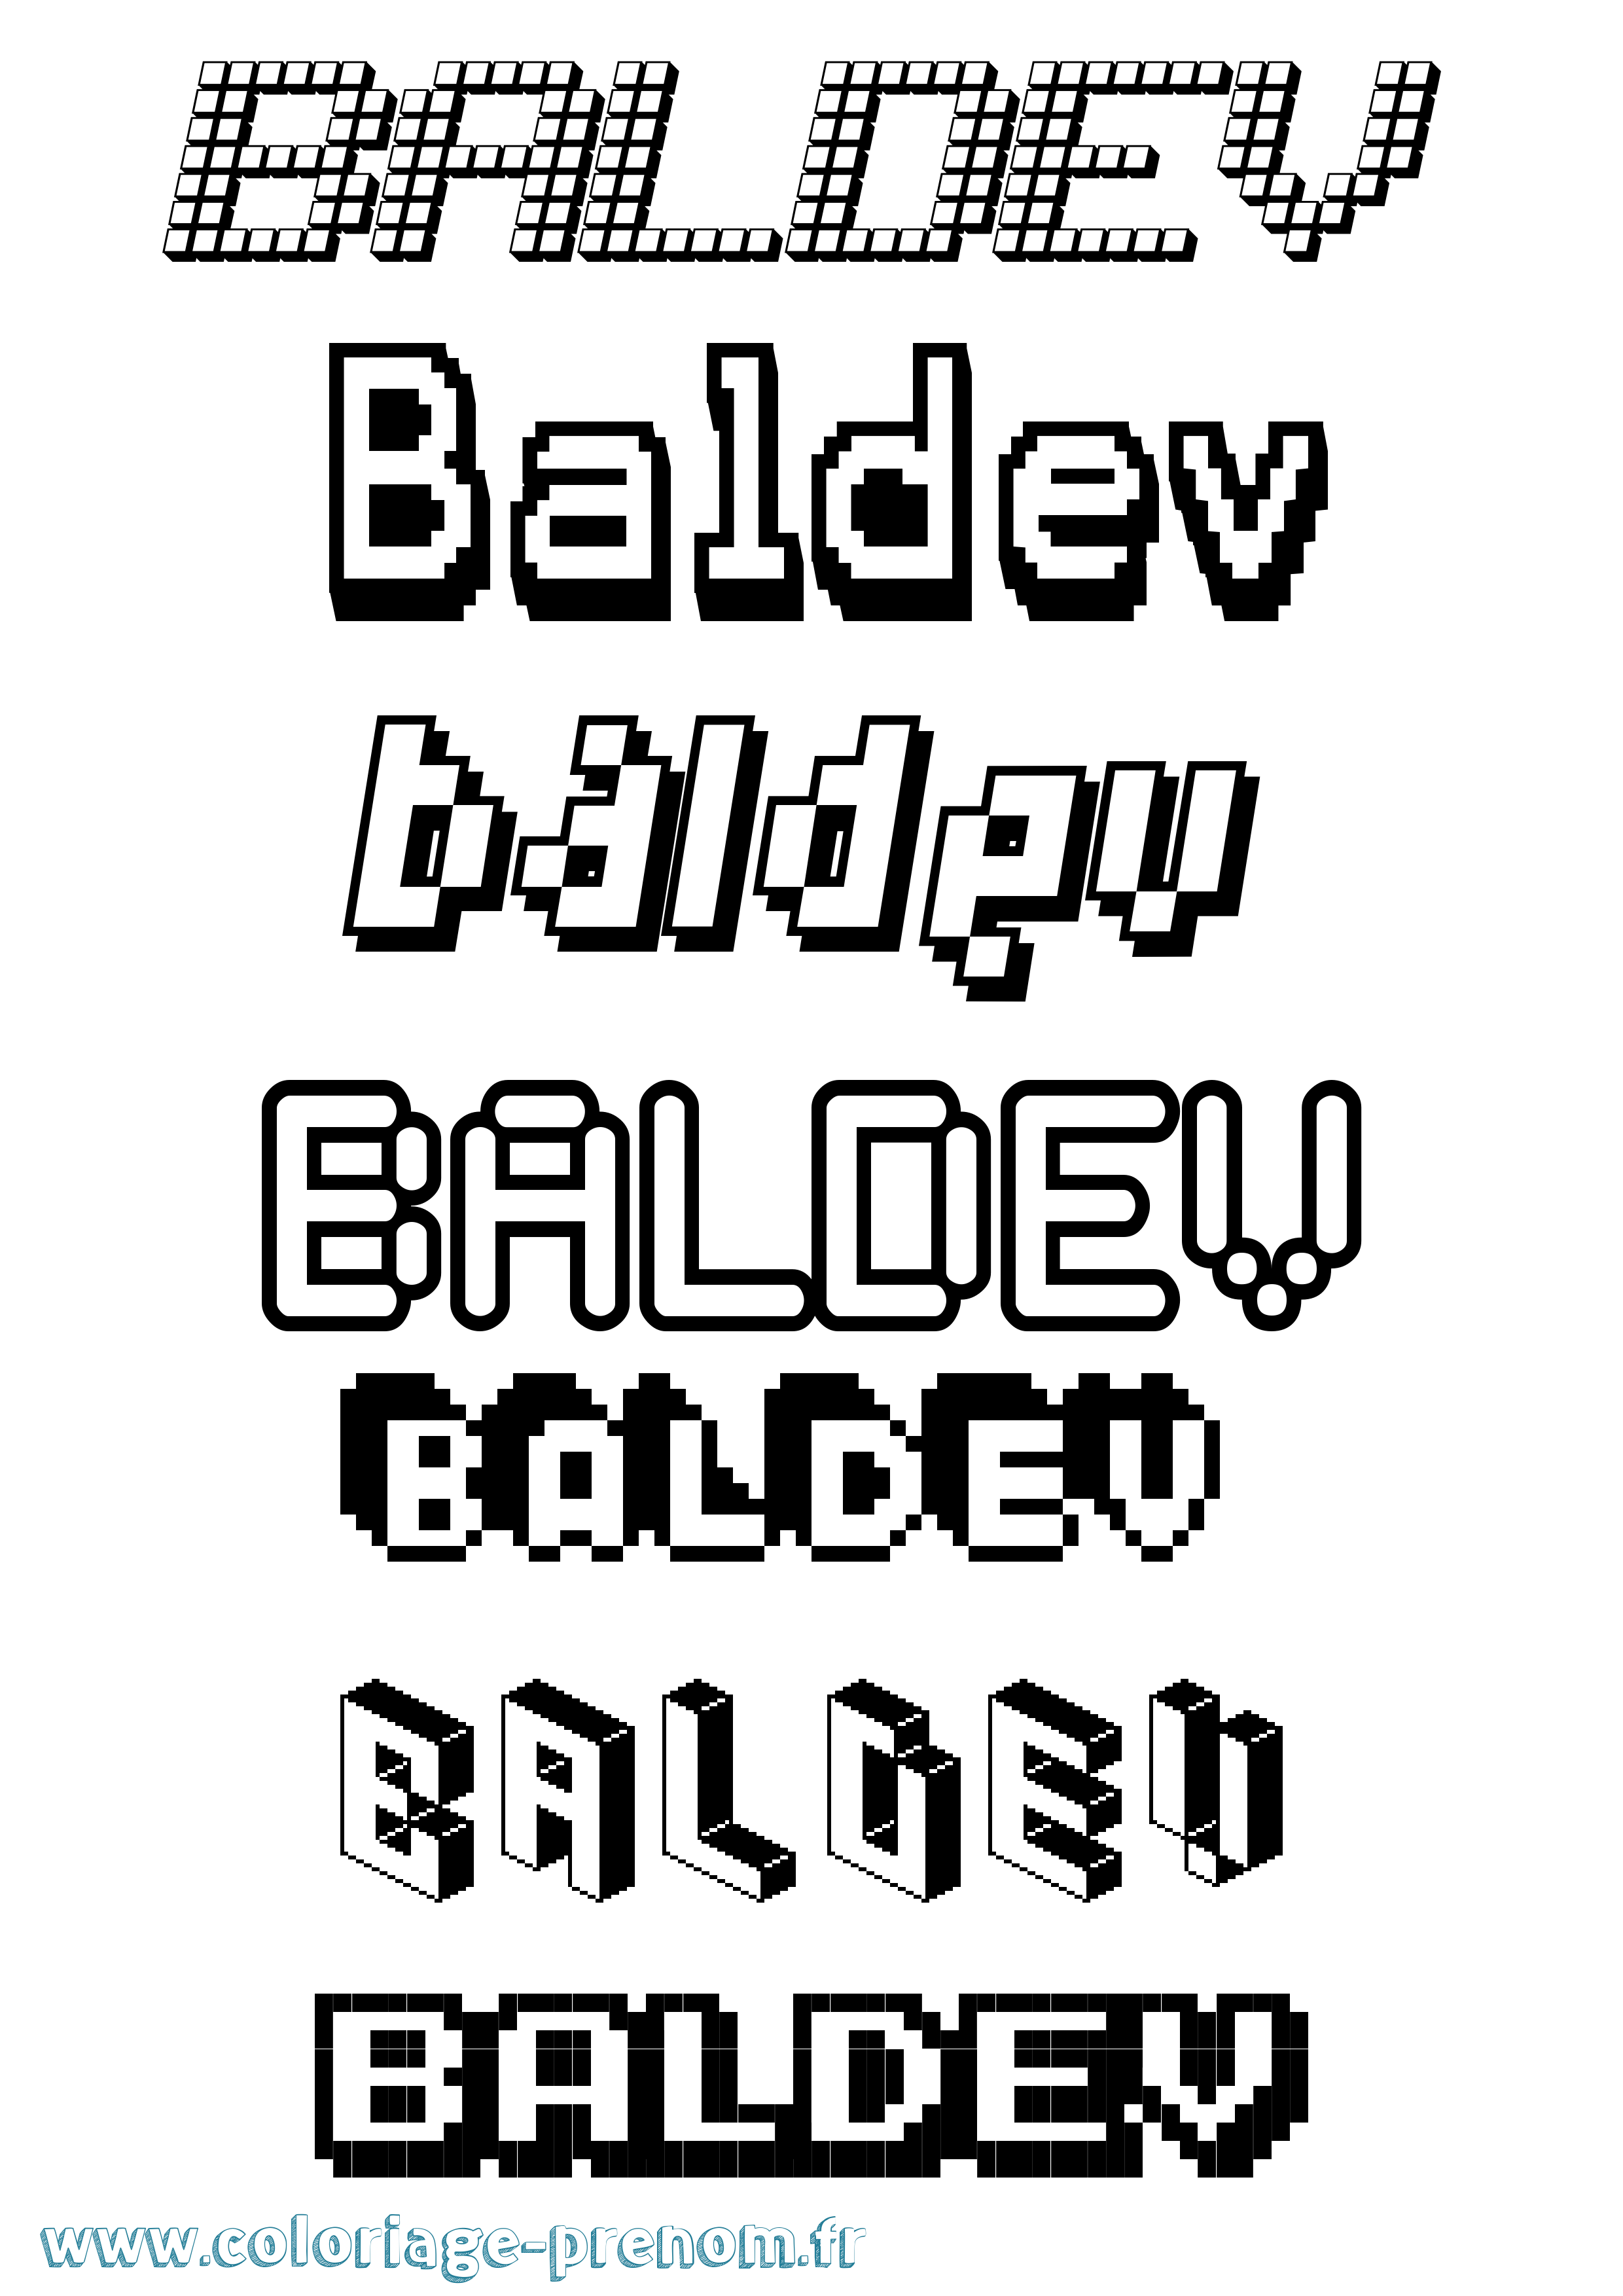 Coloriage prénom Baldev Pixel